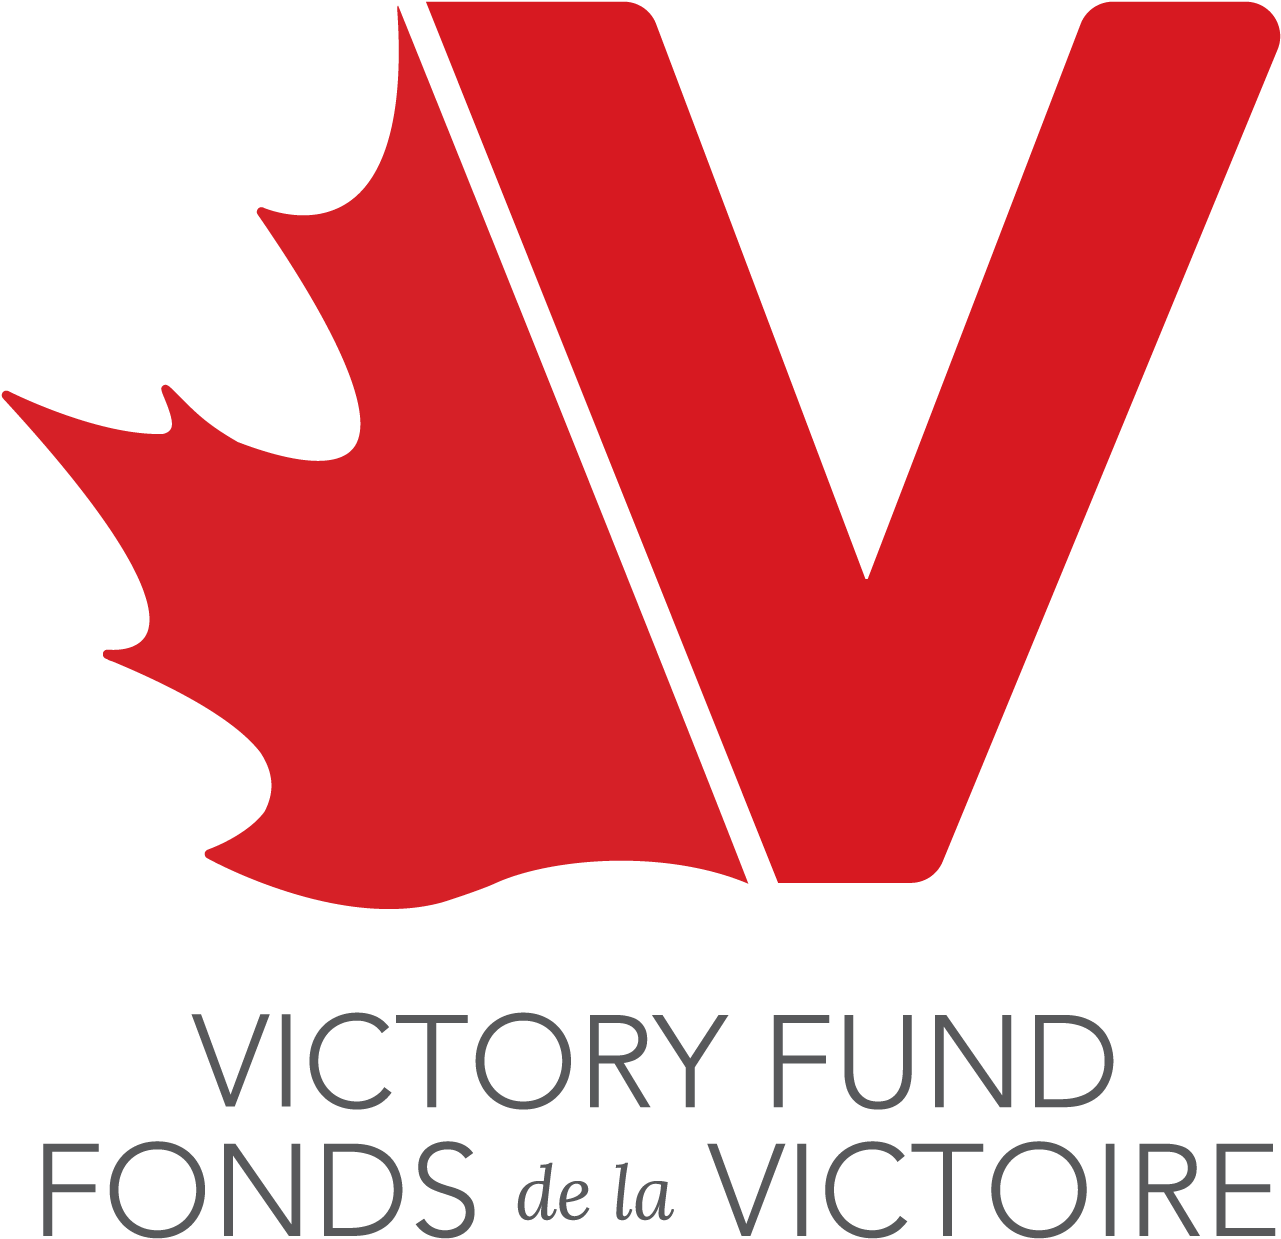 Victory Fund (1800x1656)